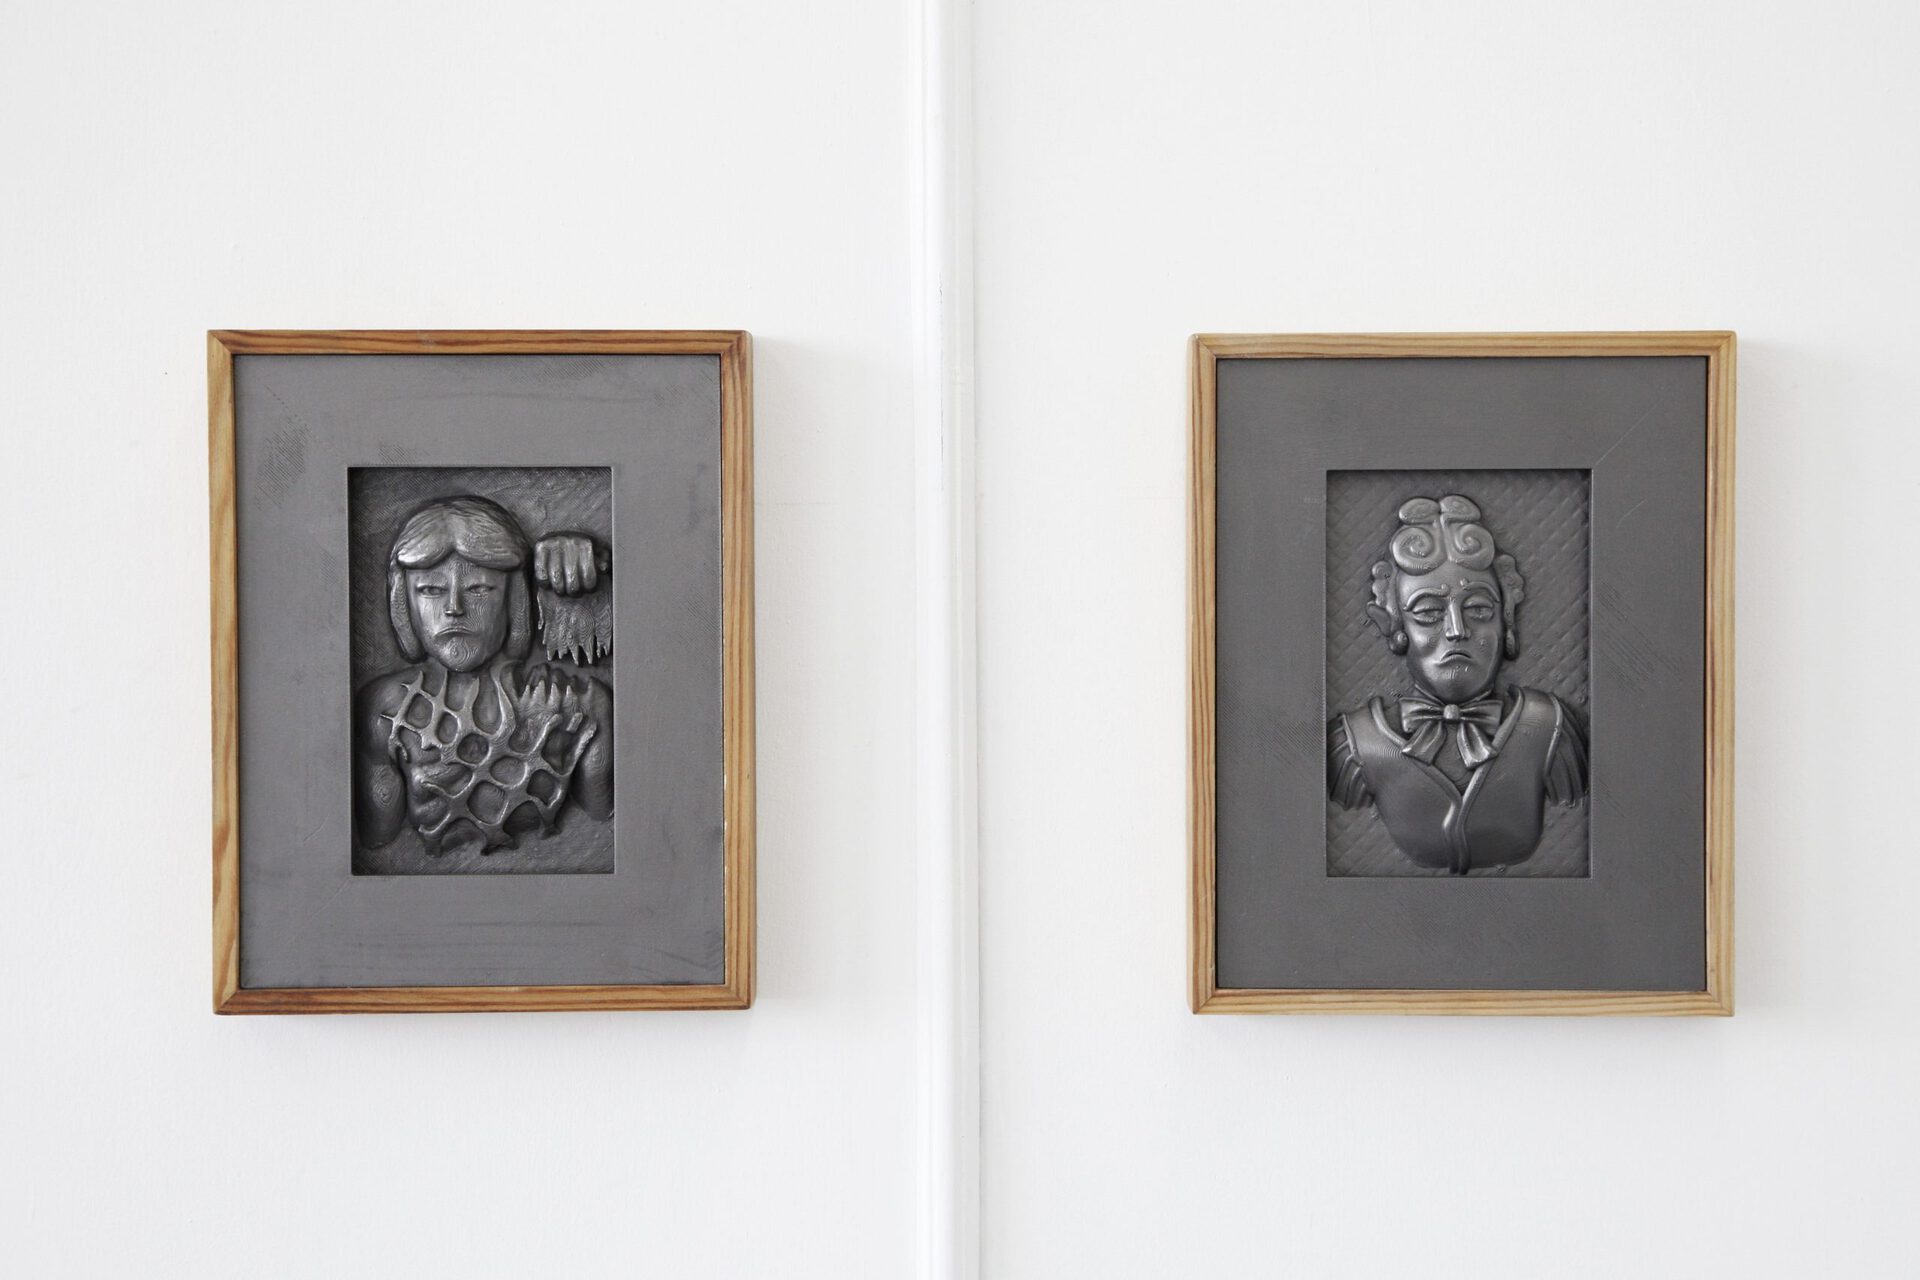 Wieland Schoenfelder, Portraits, 2021, metal coated 3d print, woodframe, 22cm x 17cm x 3cm